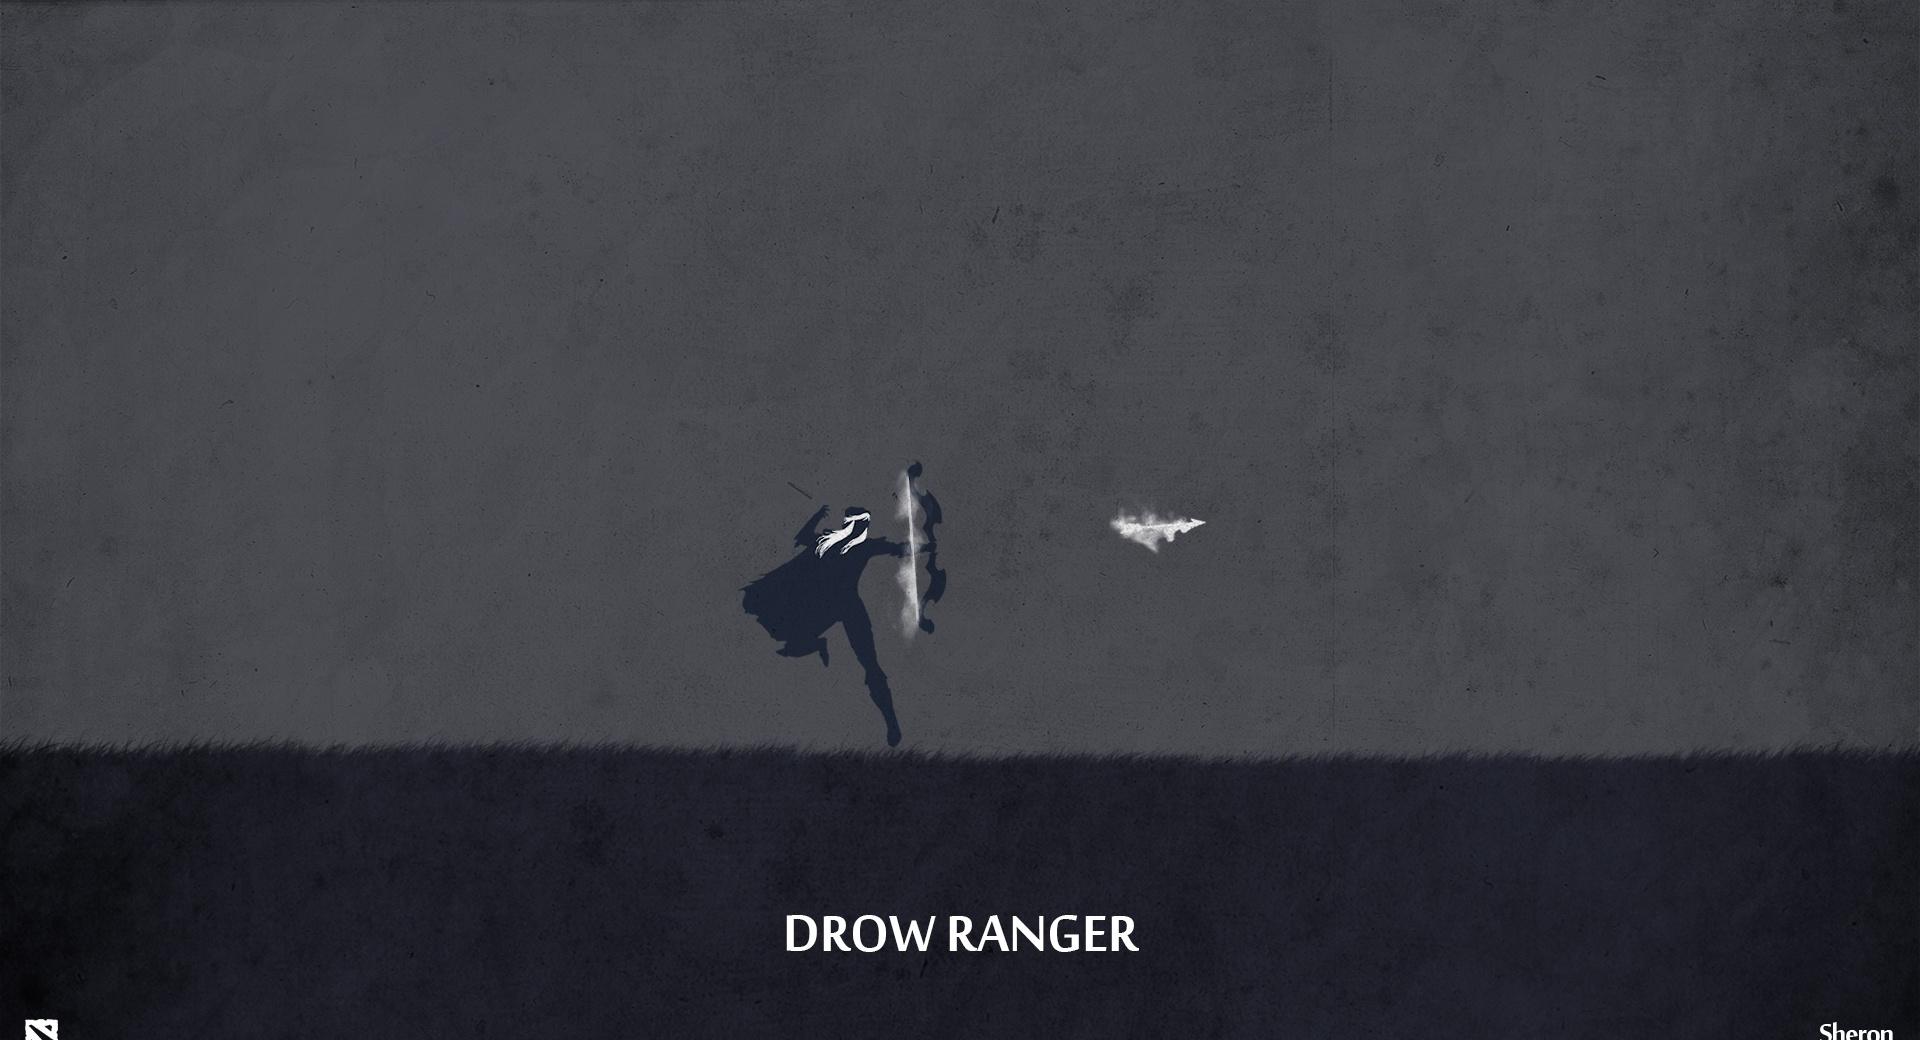 Drow Ranger - DotA 2 at 1024 x 1024 iPad size wallpapers HD quality